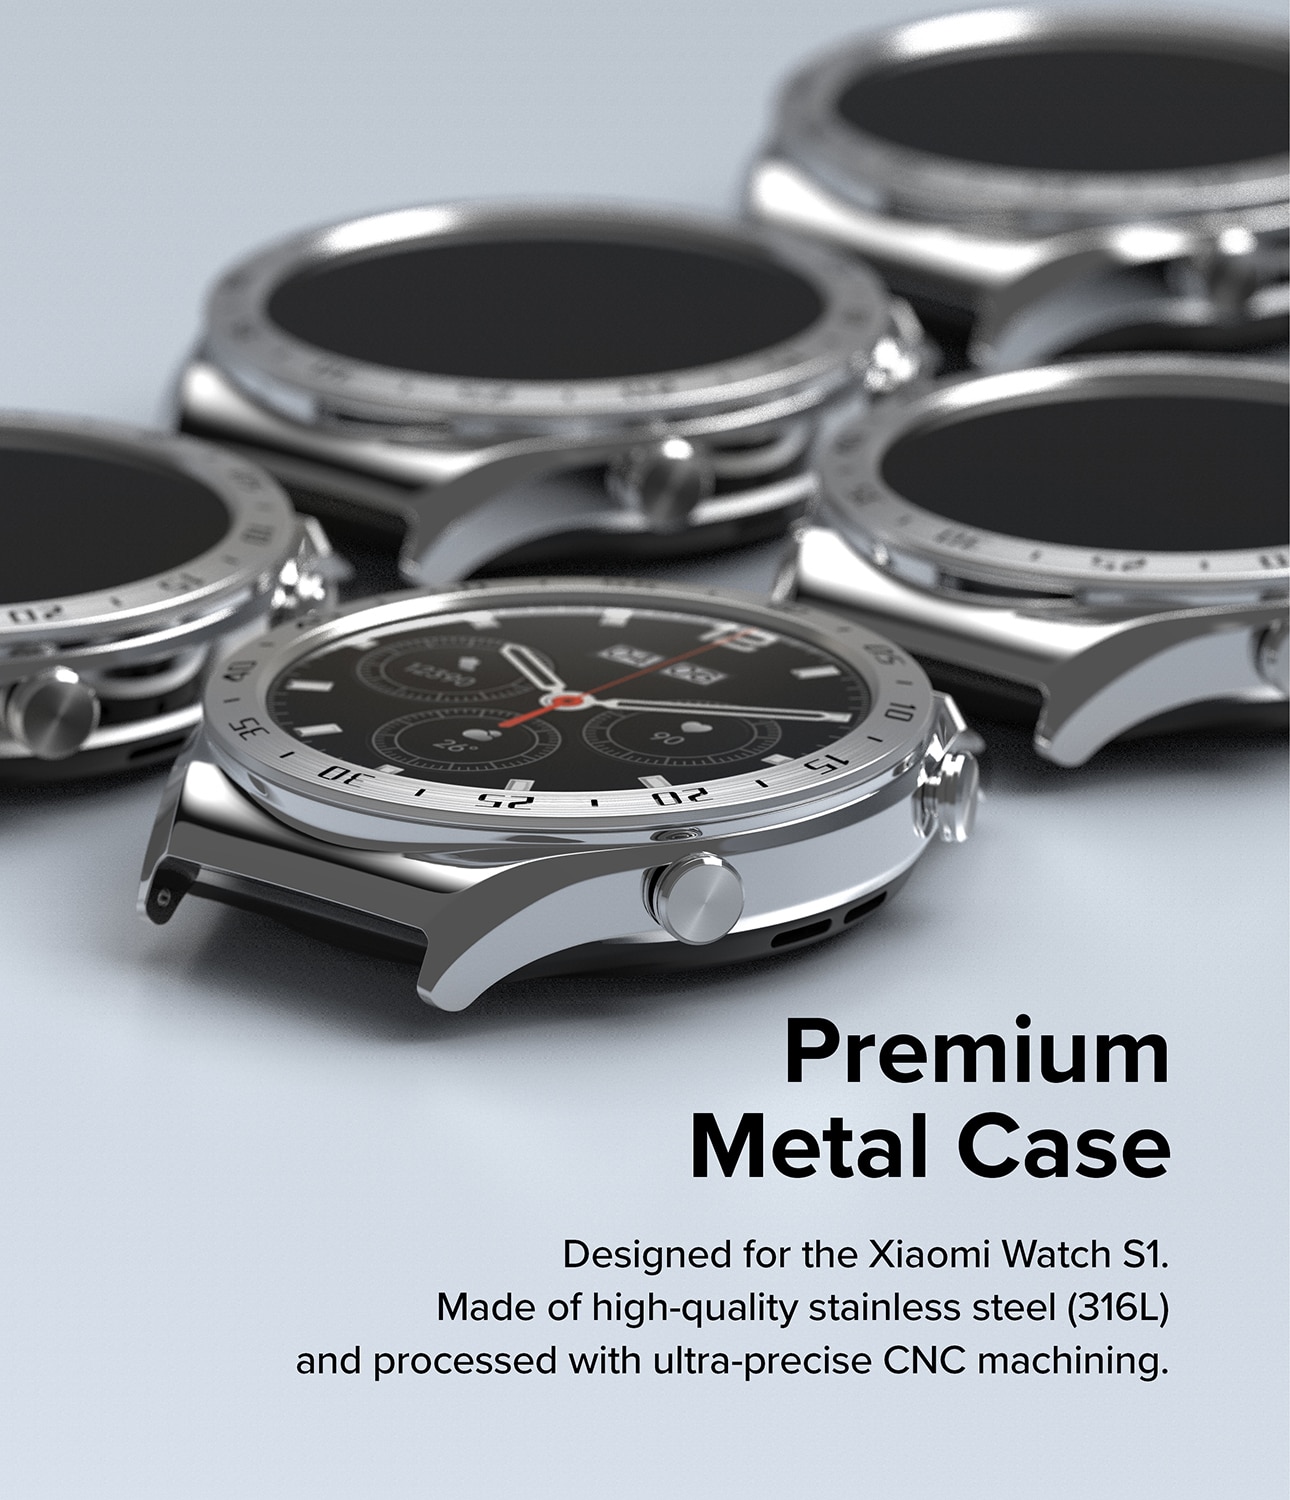 Bezel Styling Xiaomi Watch S1 Silber